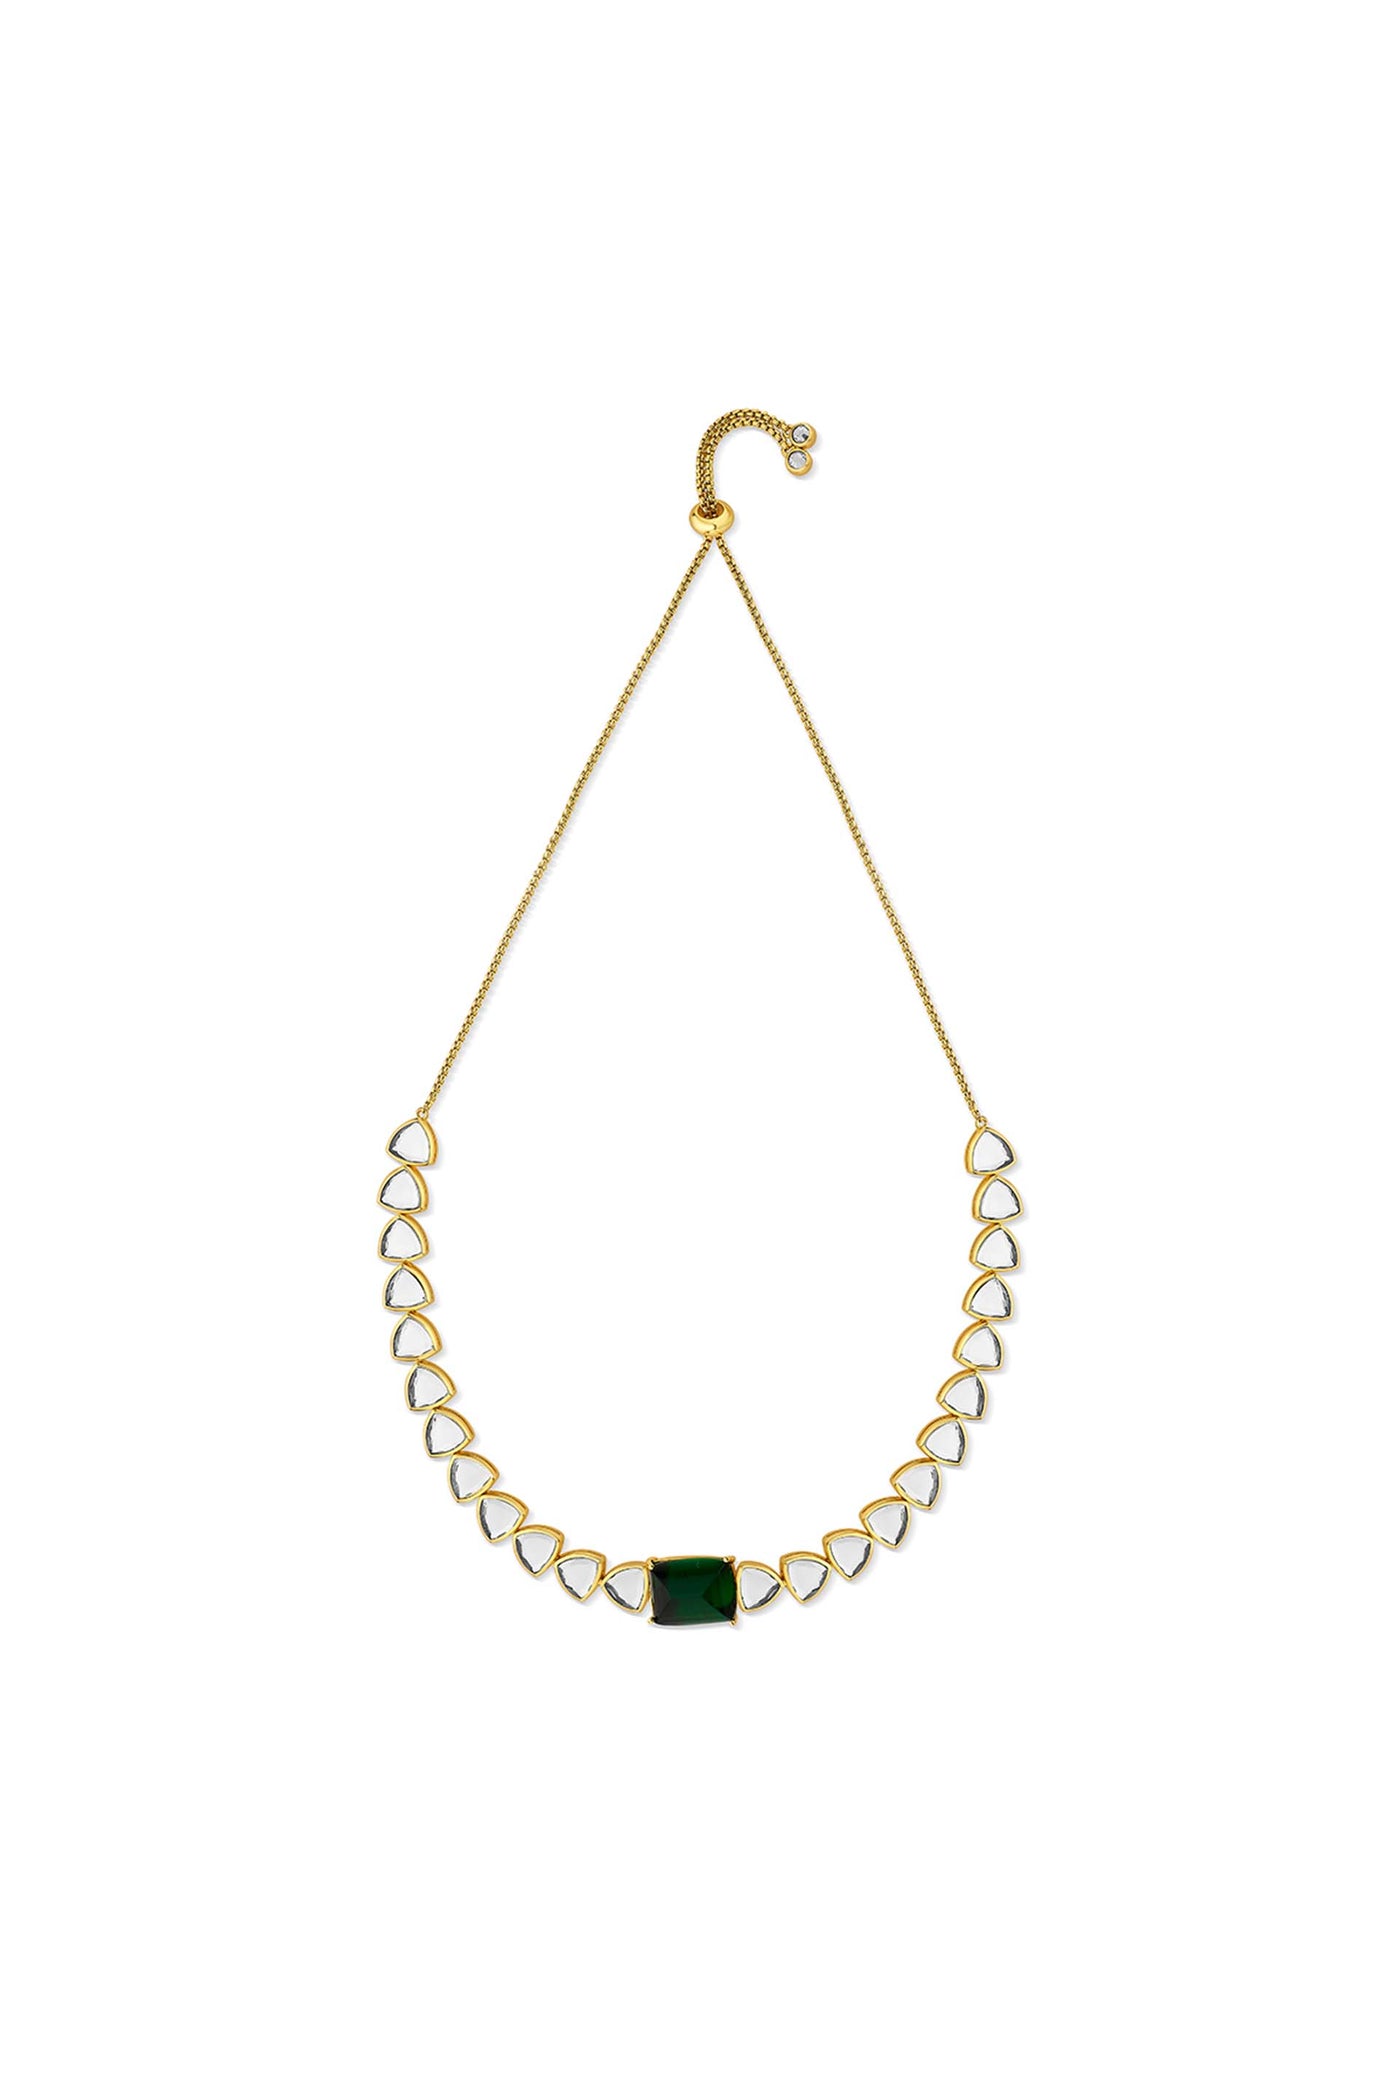 Isharya Raina Hydro Emerald & CZ Choker fashion jewellery online shopping melange singapore indian designer wear